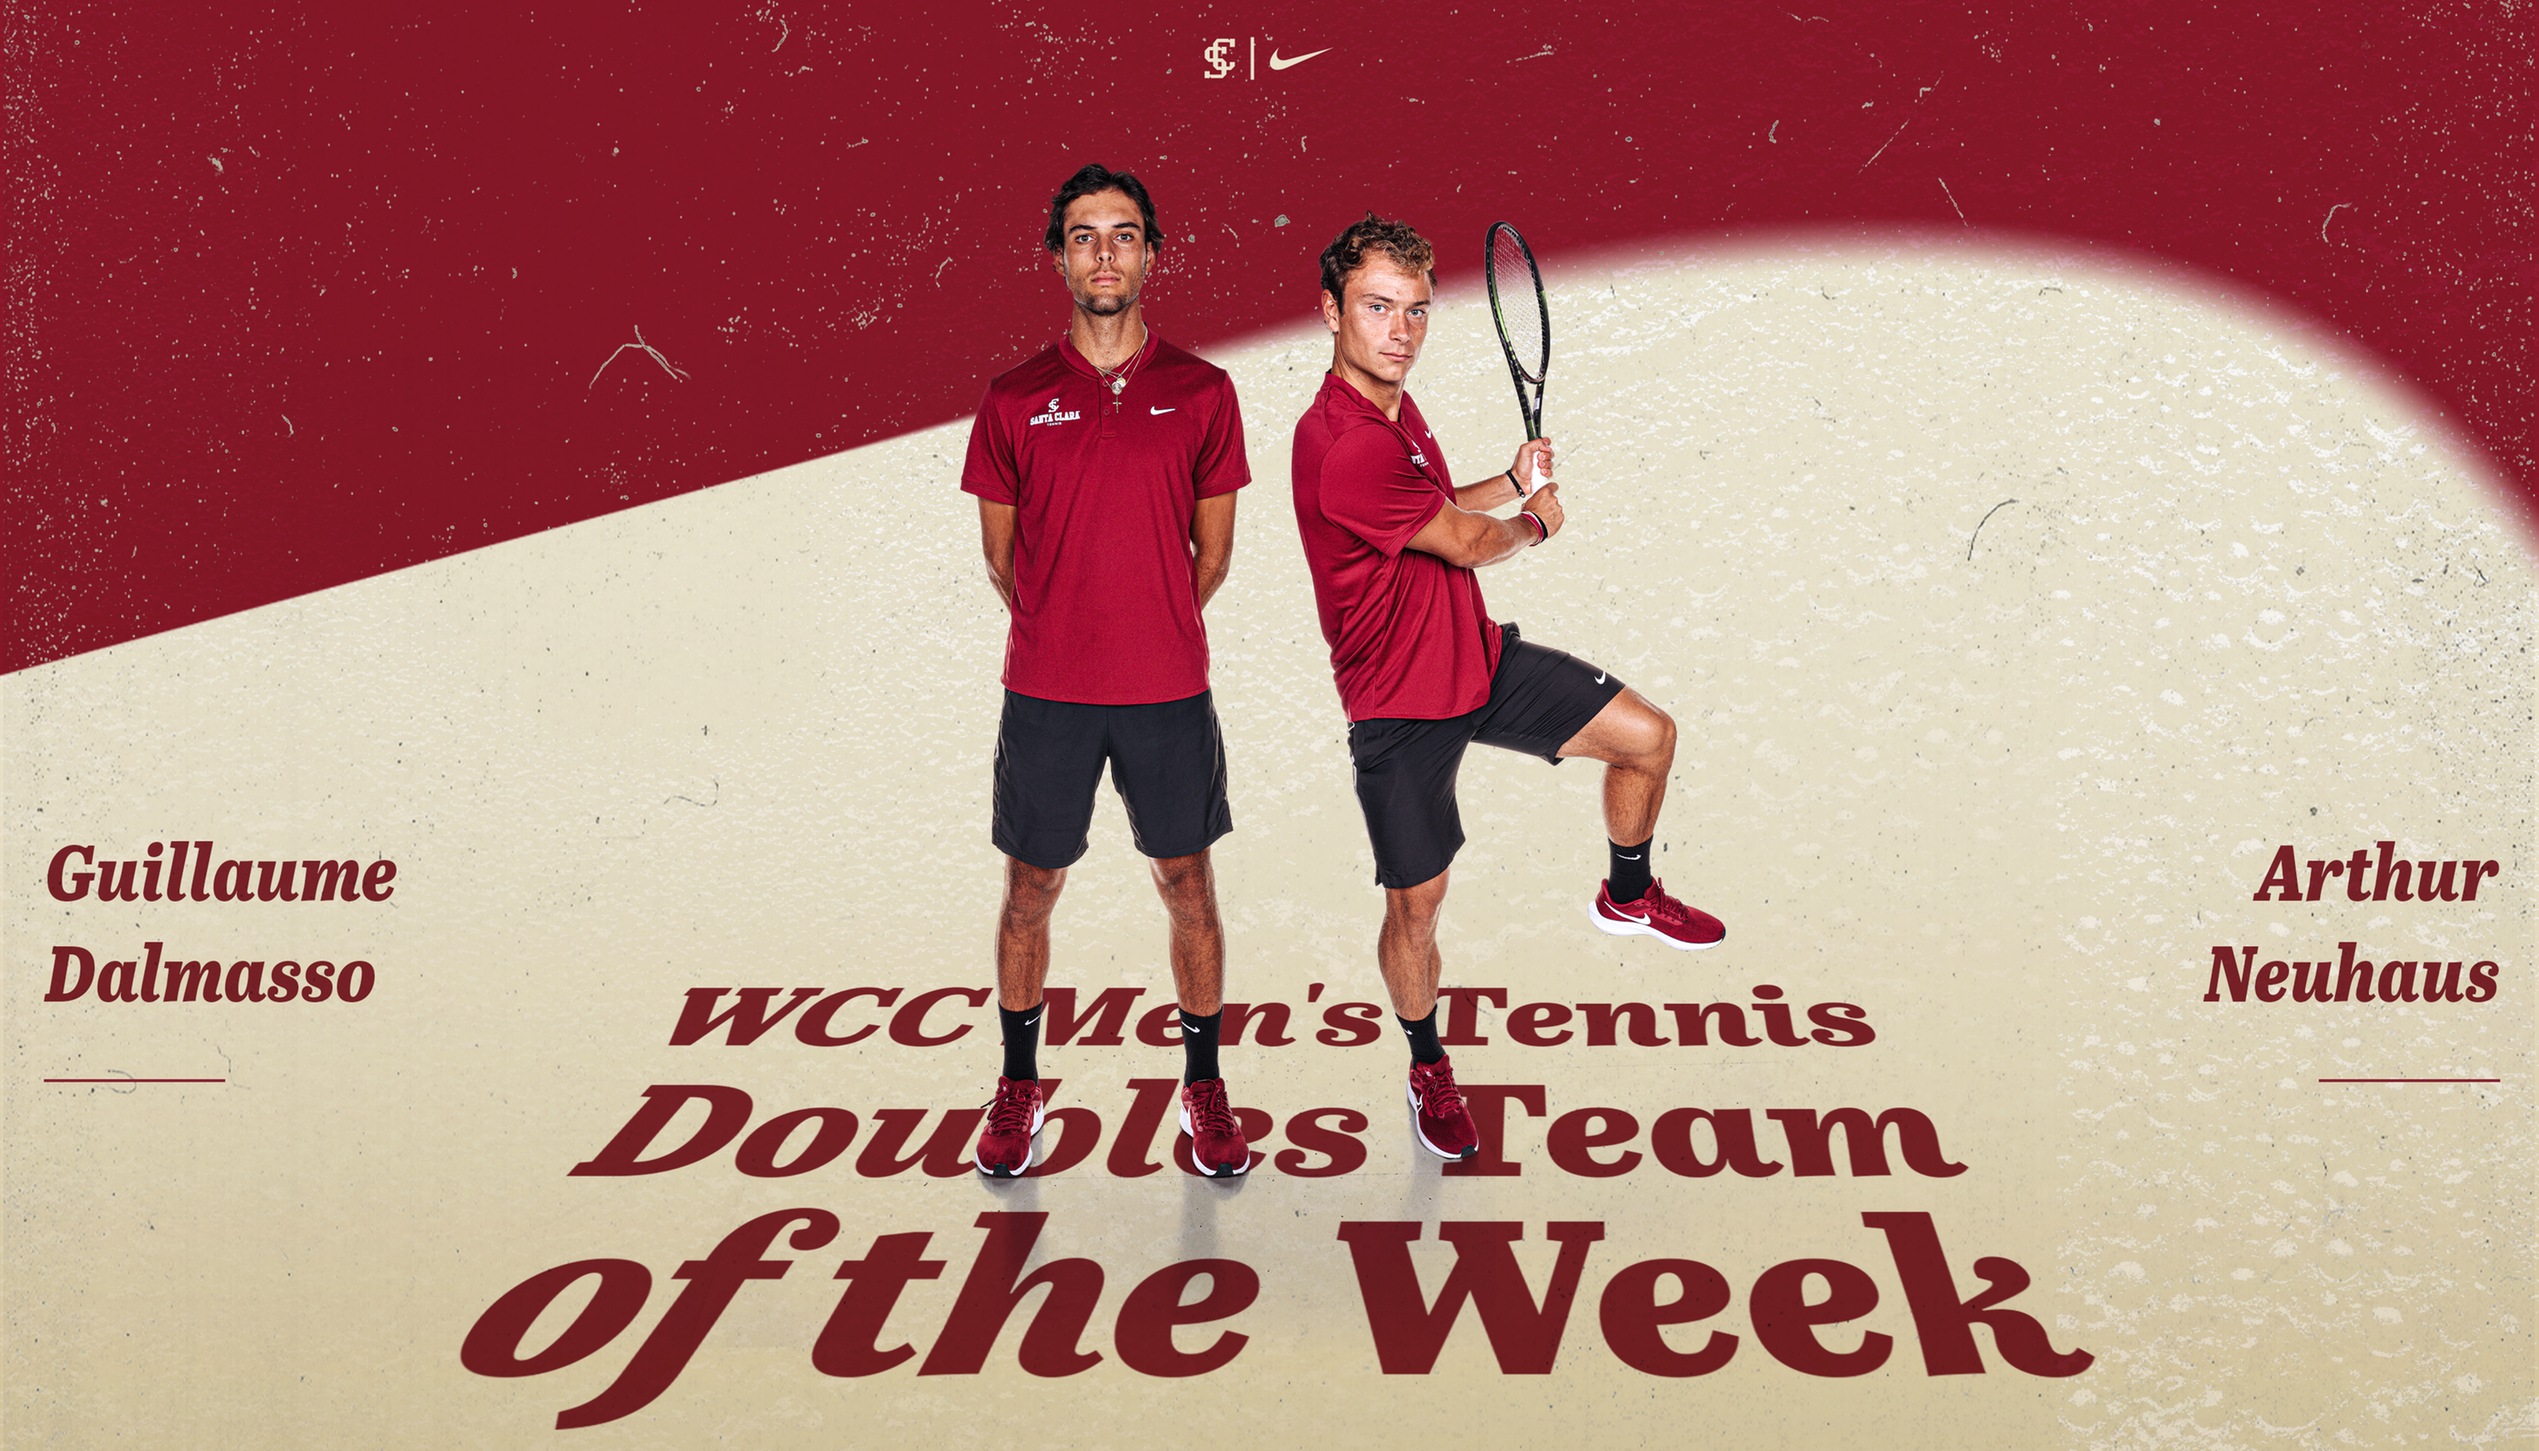 Dalmasso/Neuhaus Named WCC Men’s Tennis Doubles Team of the Week